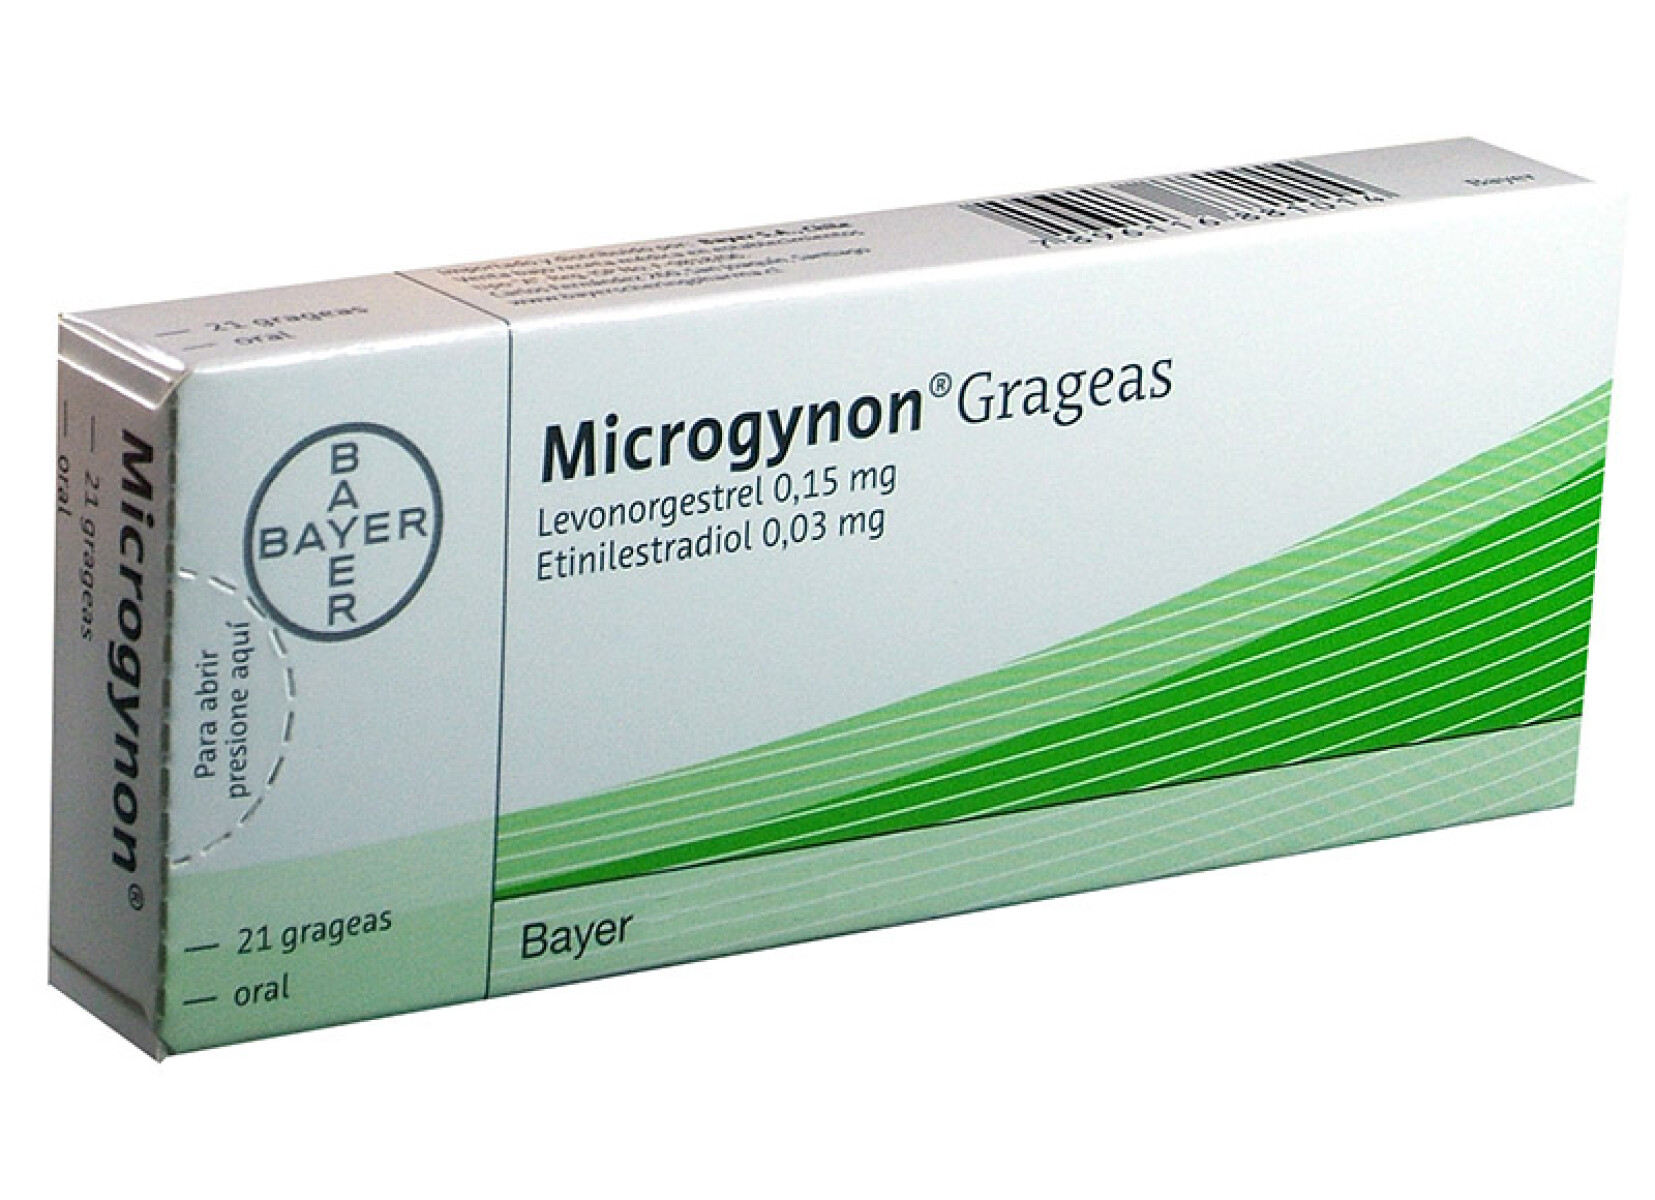 Microgynon Anticonceptivas 21 grageas 